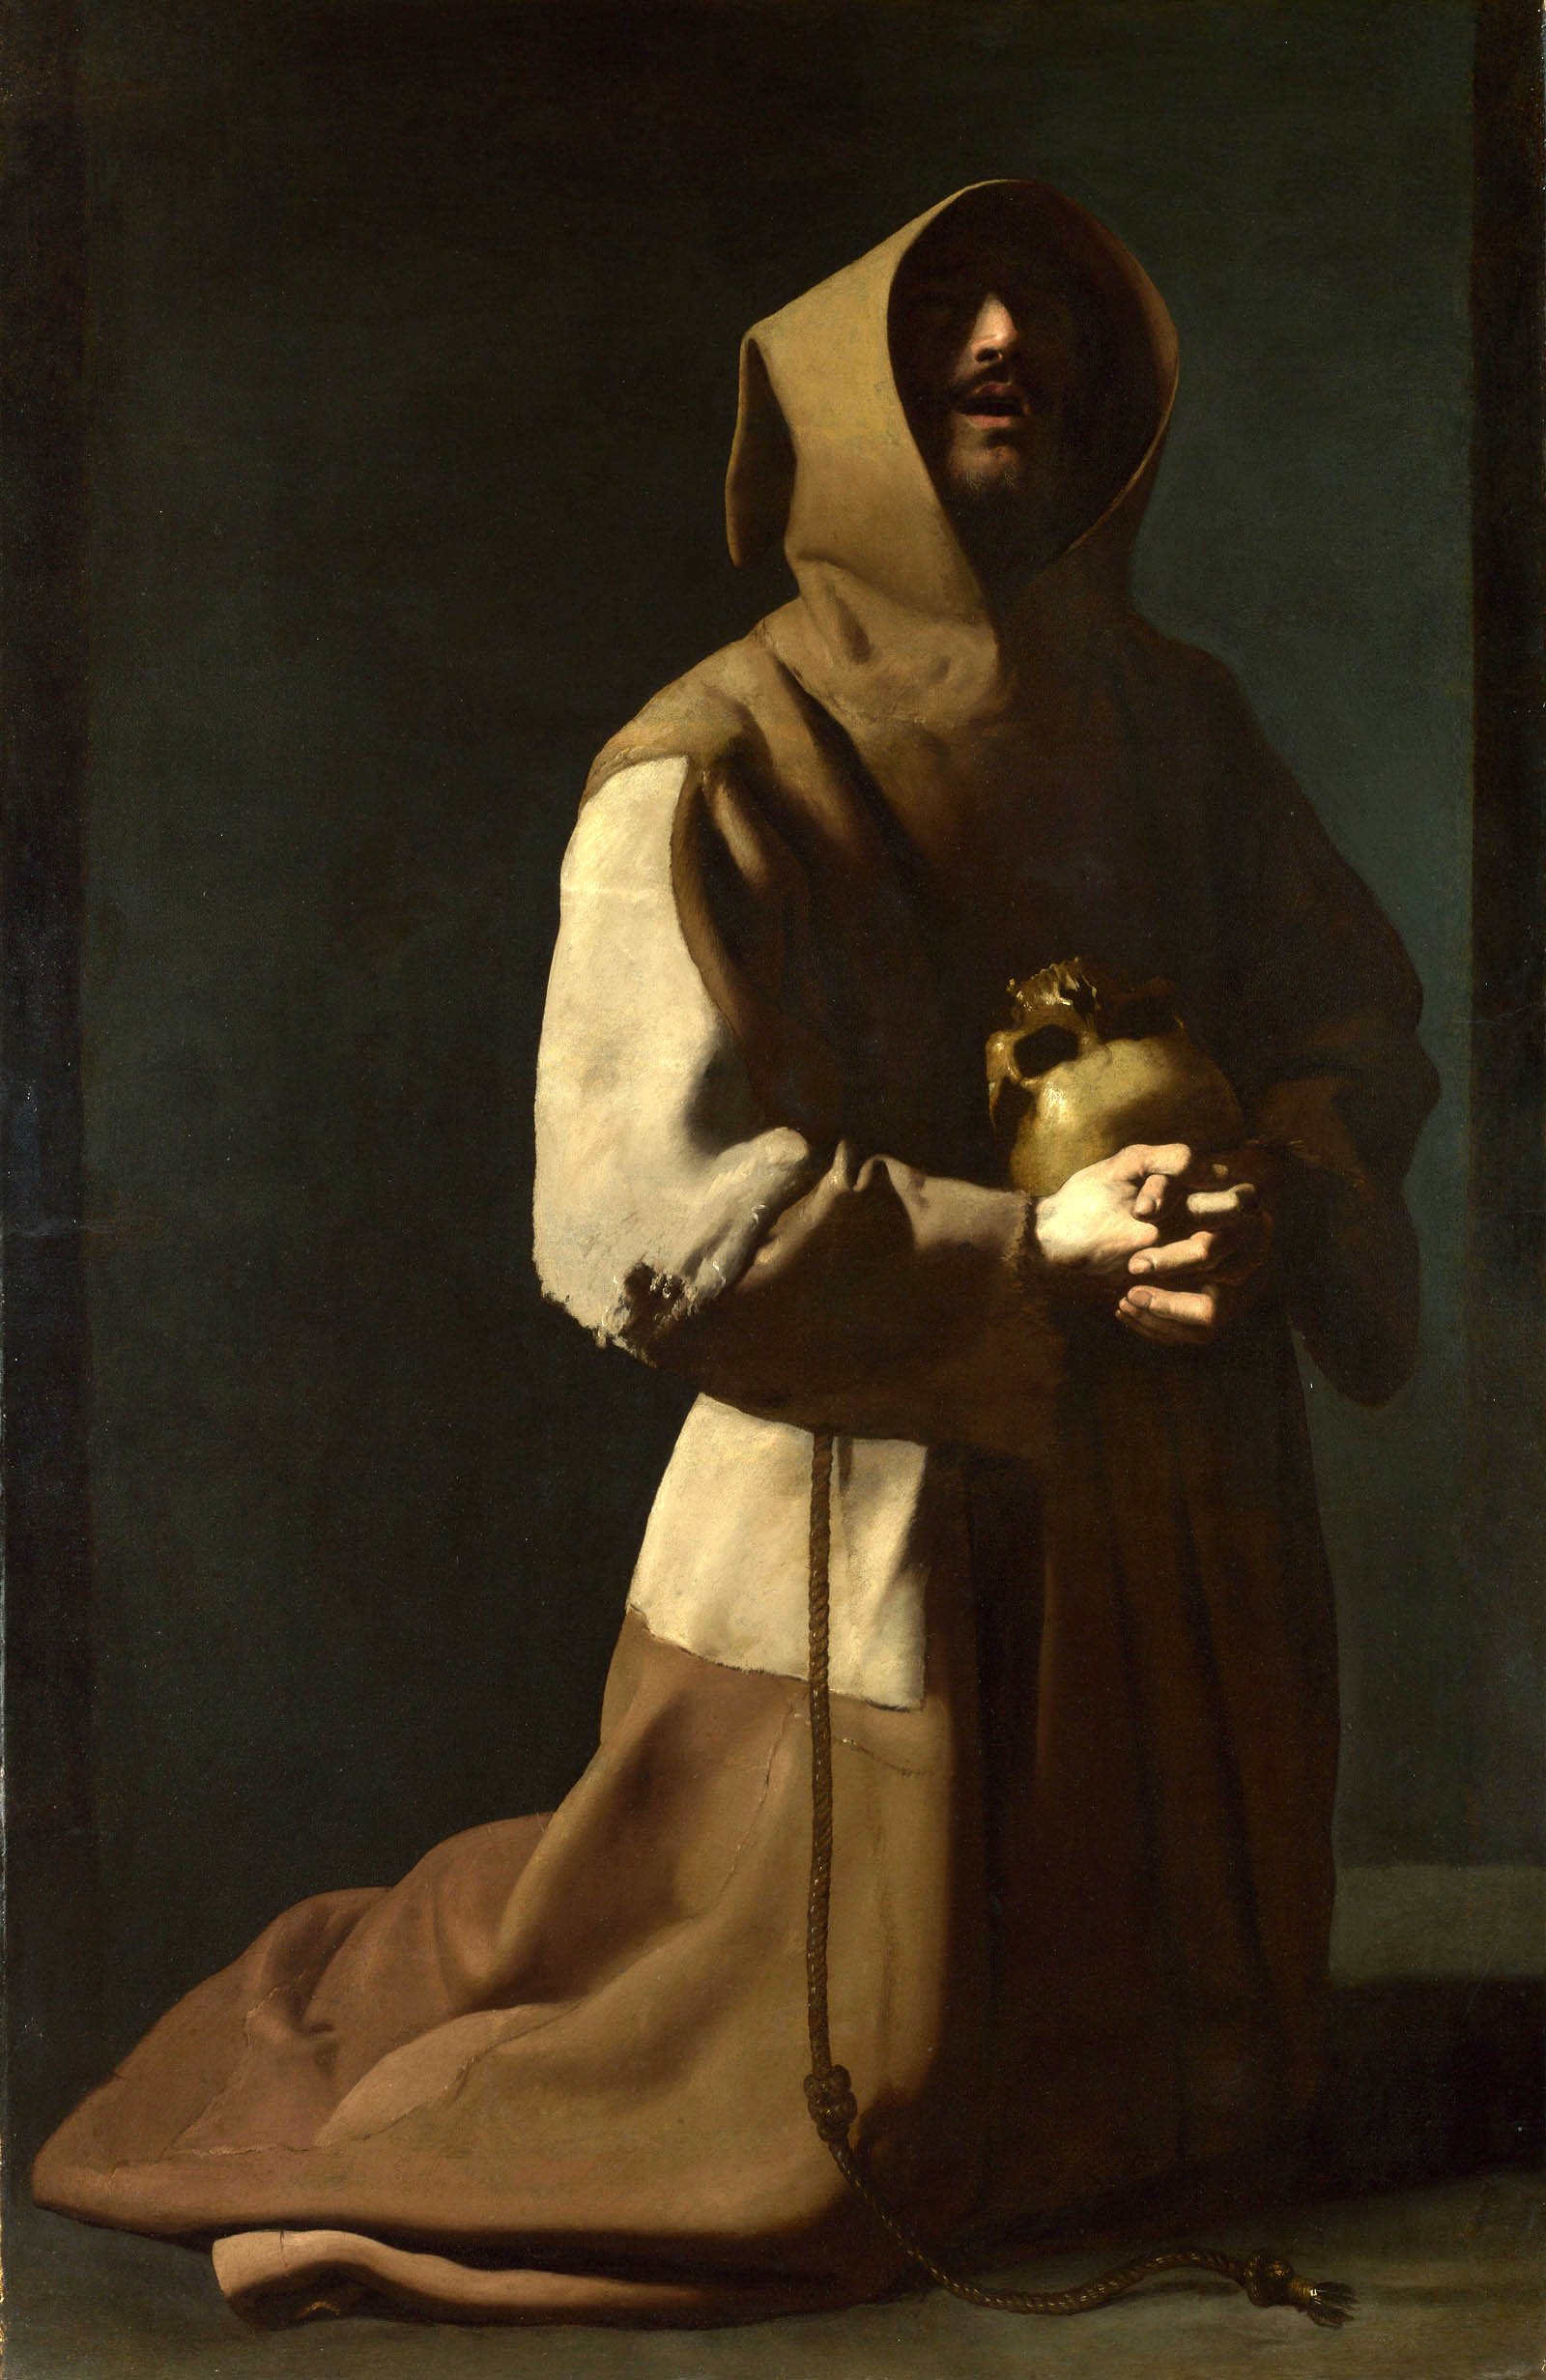 Saint Francis in Meditation by Francisco de Zurbarán | my daily art display